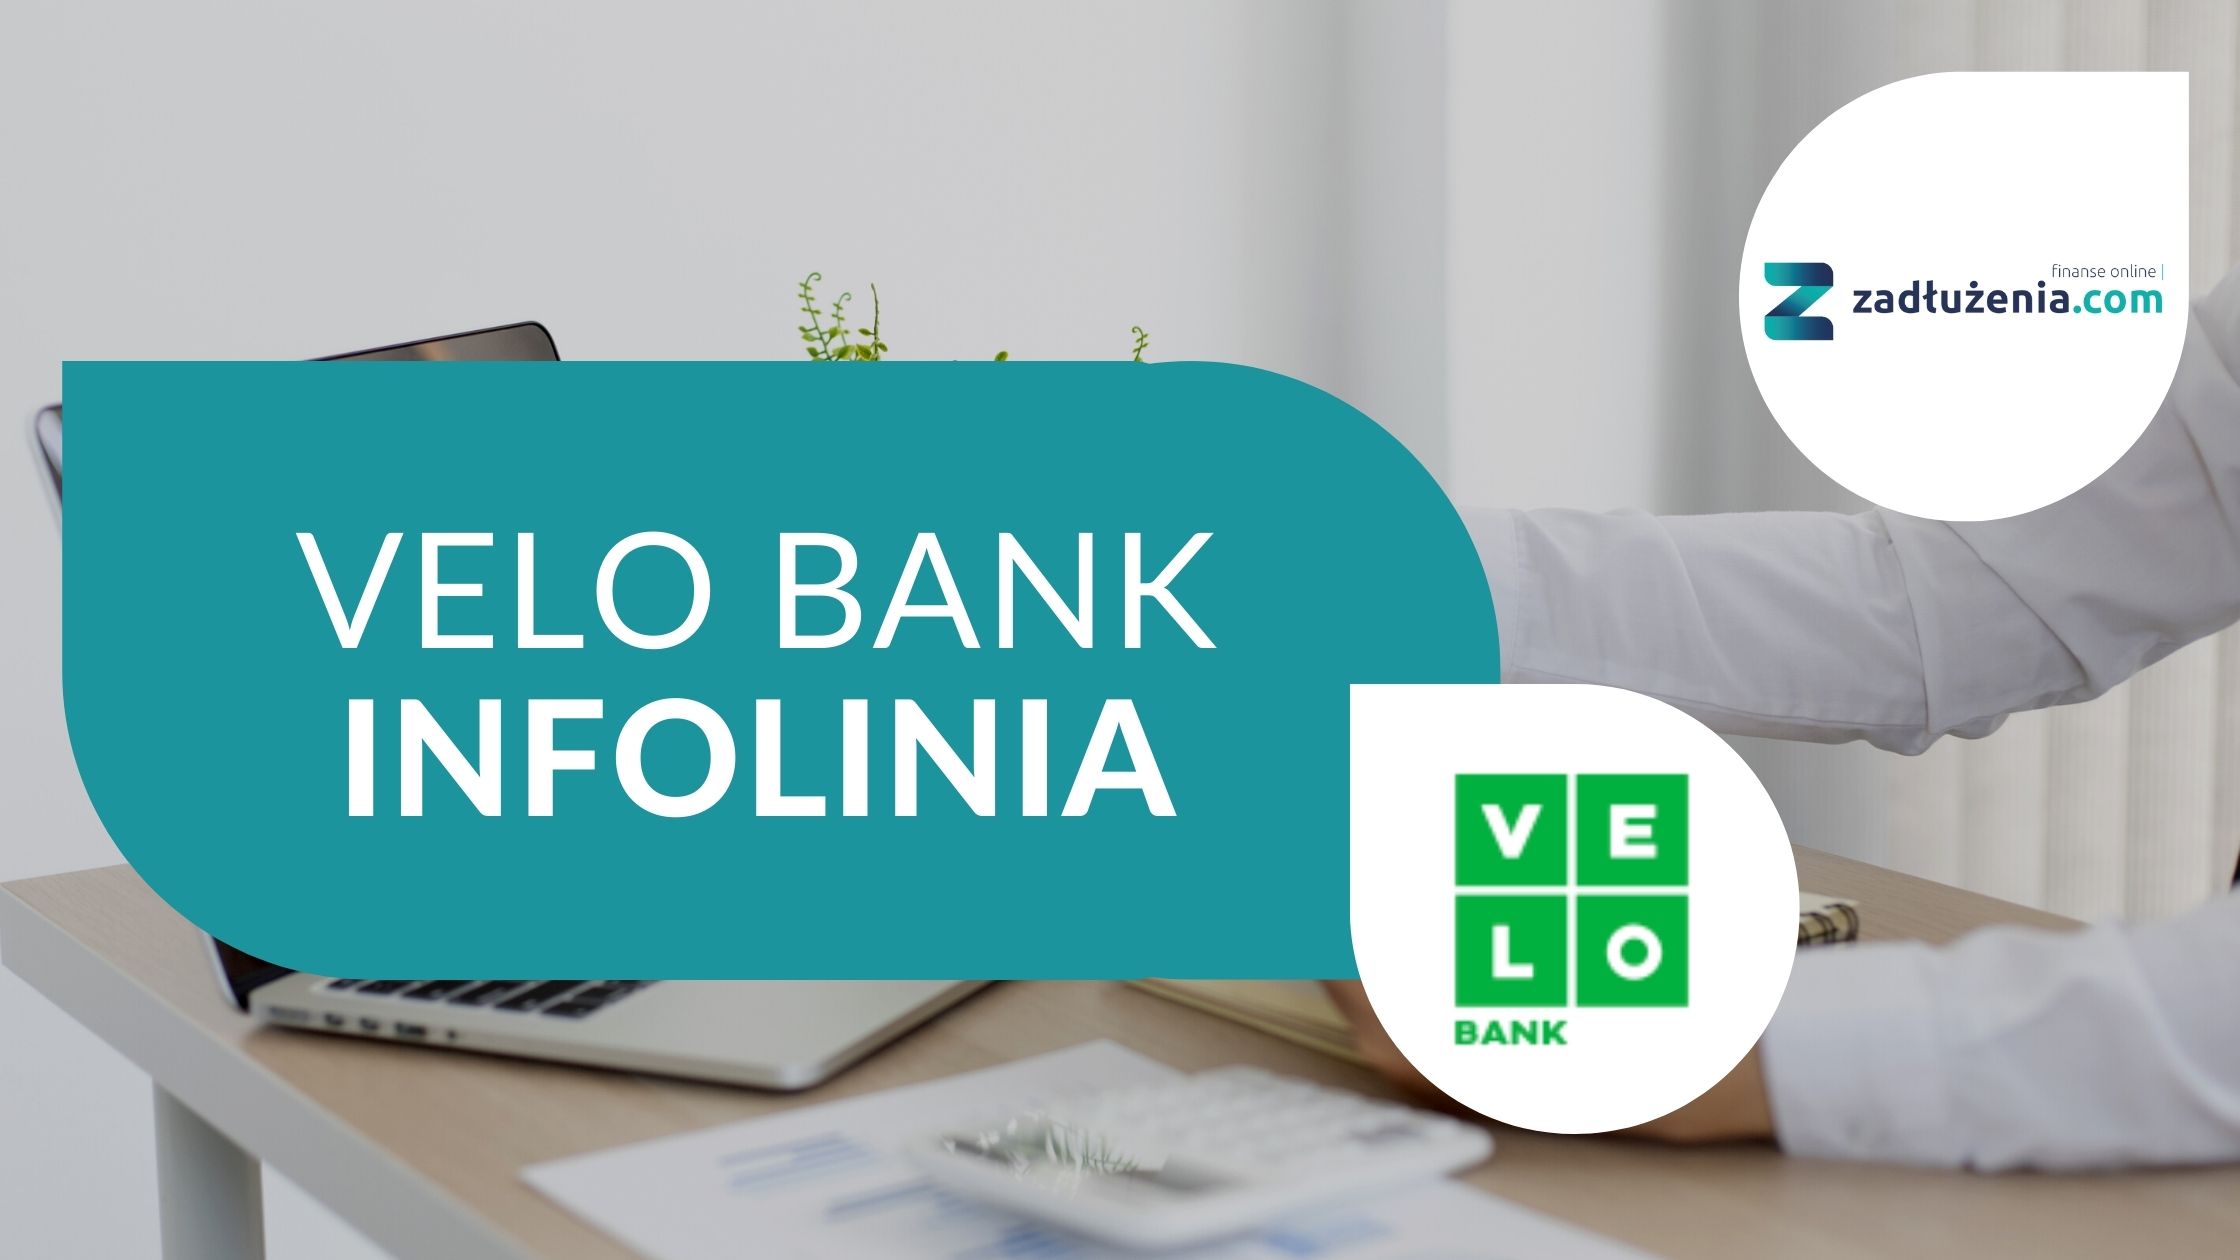 Velo Bank – kontakt, infolinia